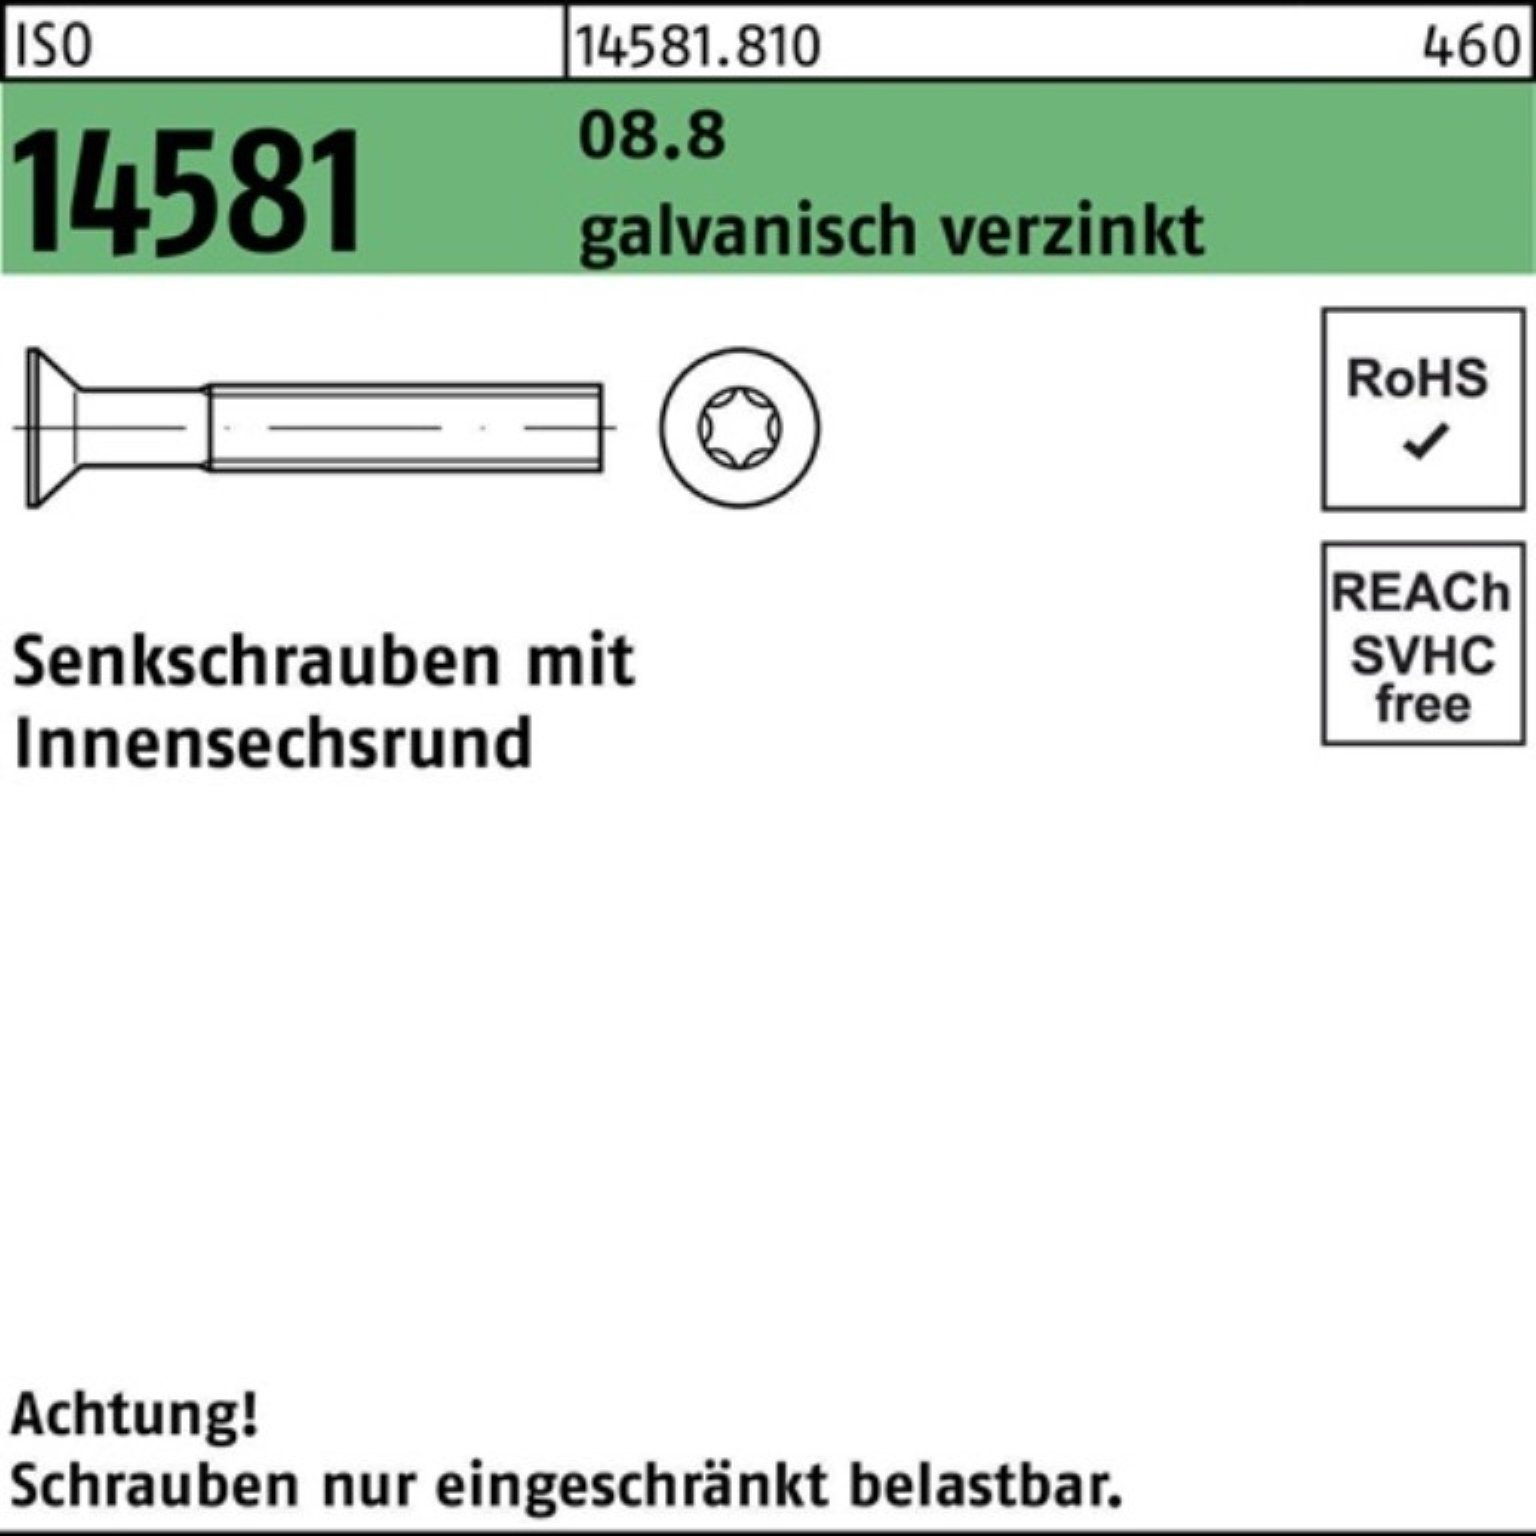 Reyher Senkschraube 500er Pack 500St. 8.8 T30 ISO ISR Senkschraube galv.verz. 14581 M6x25